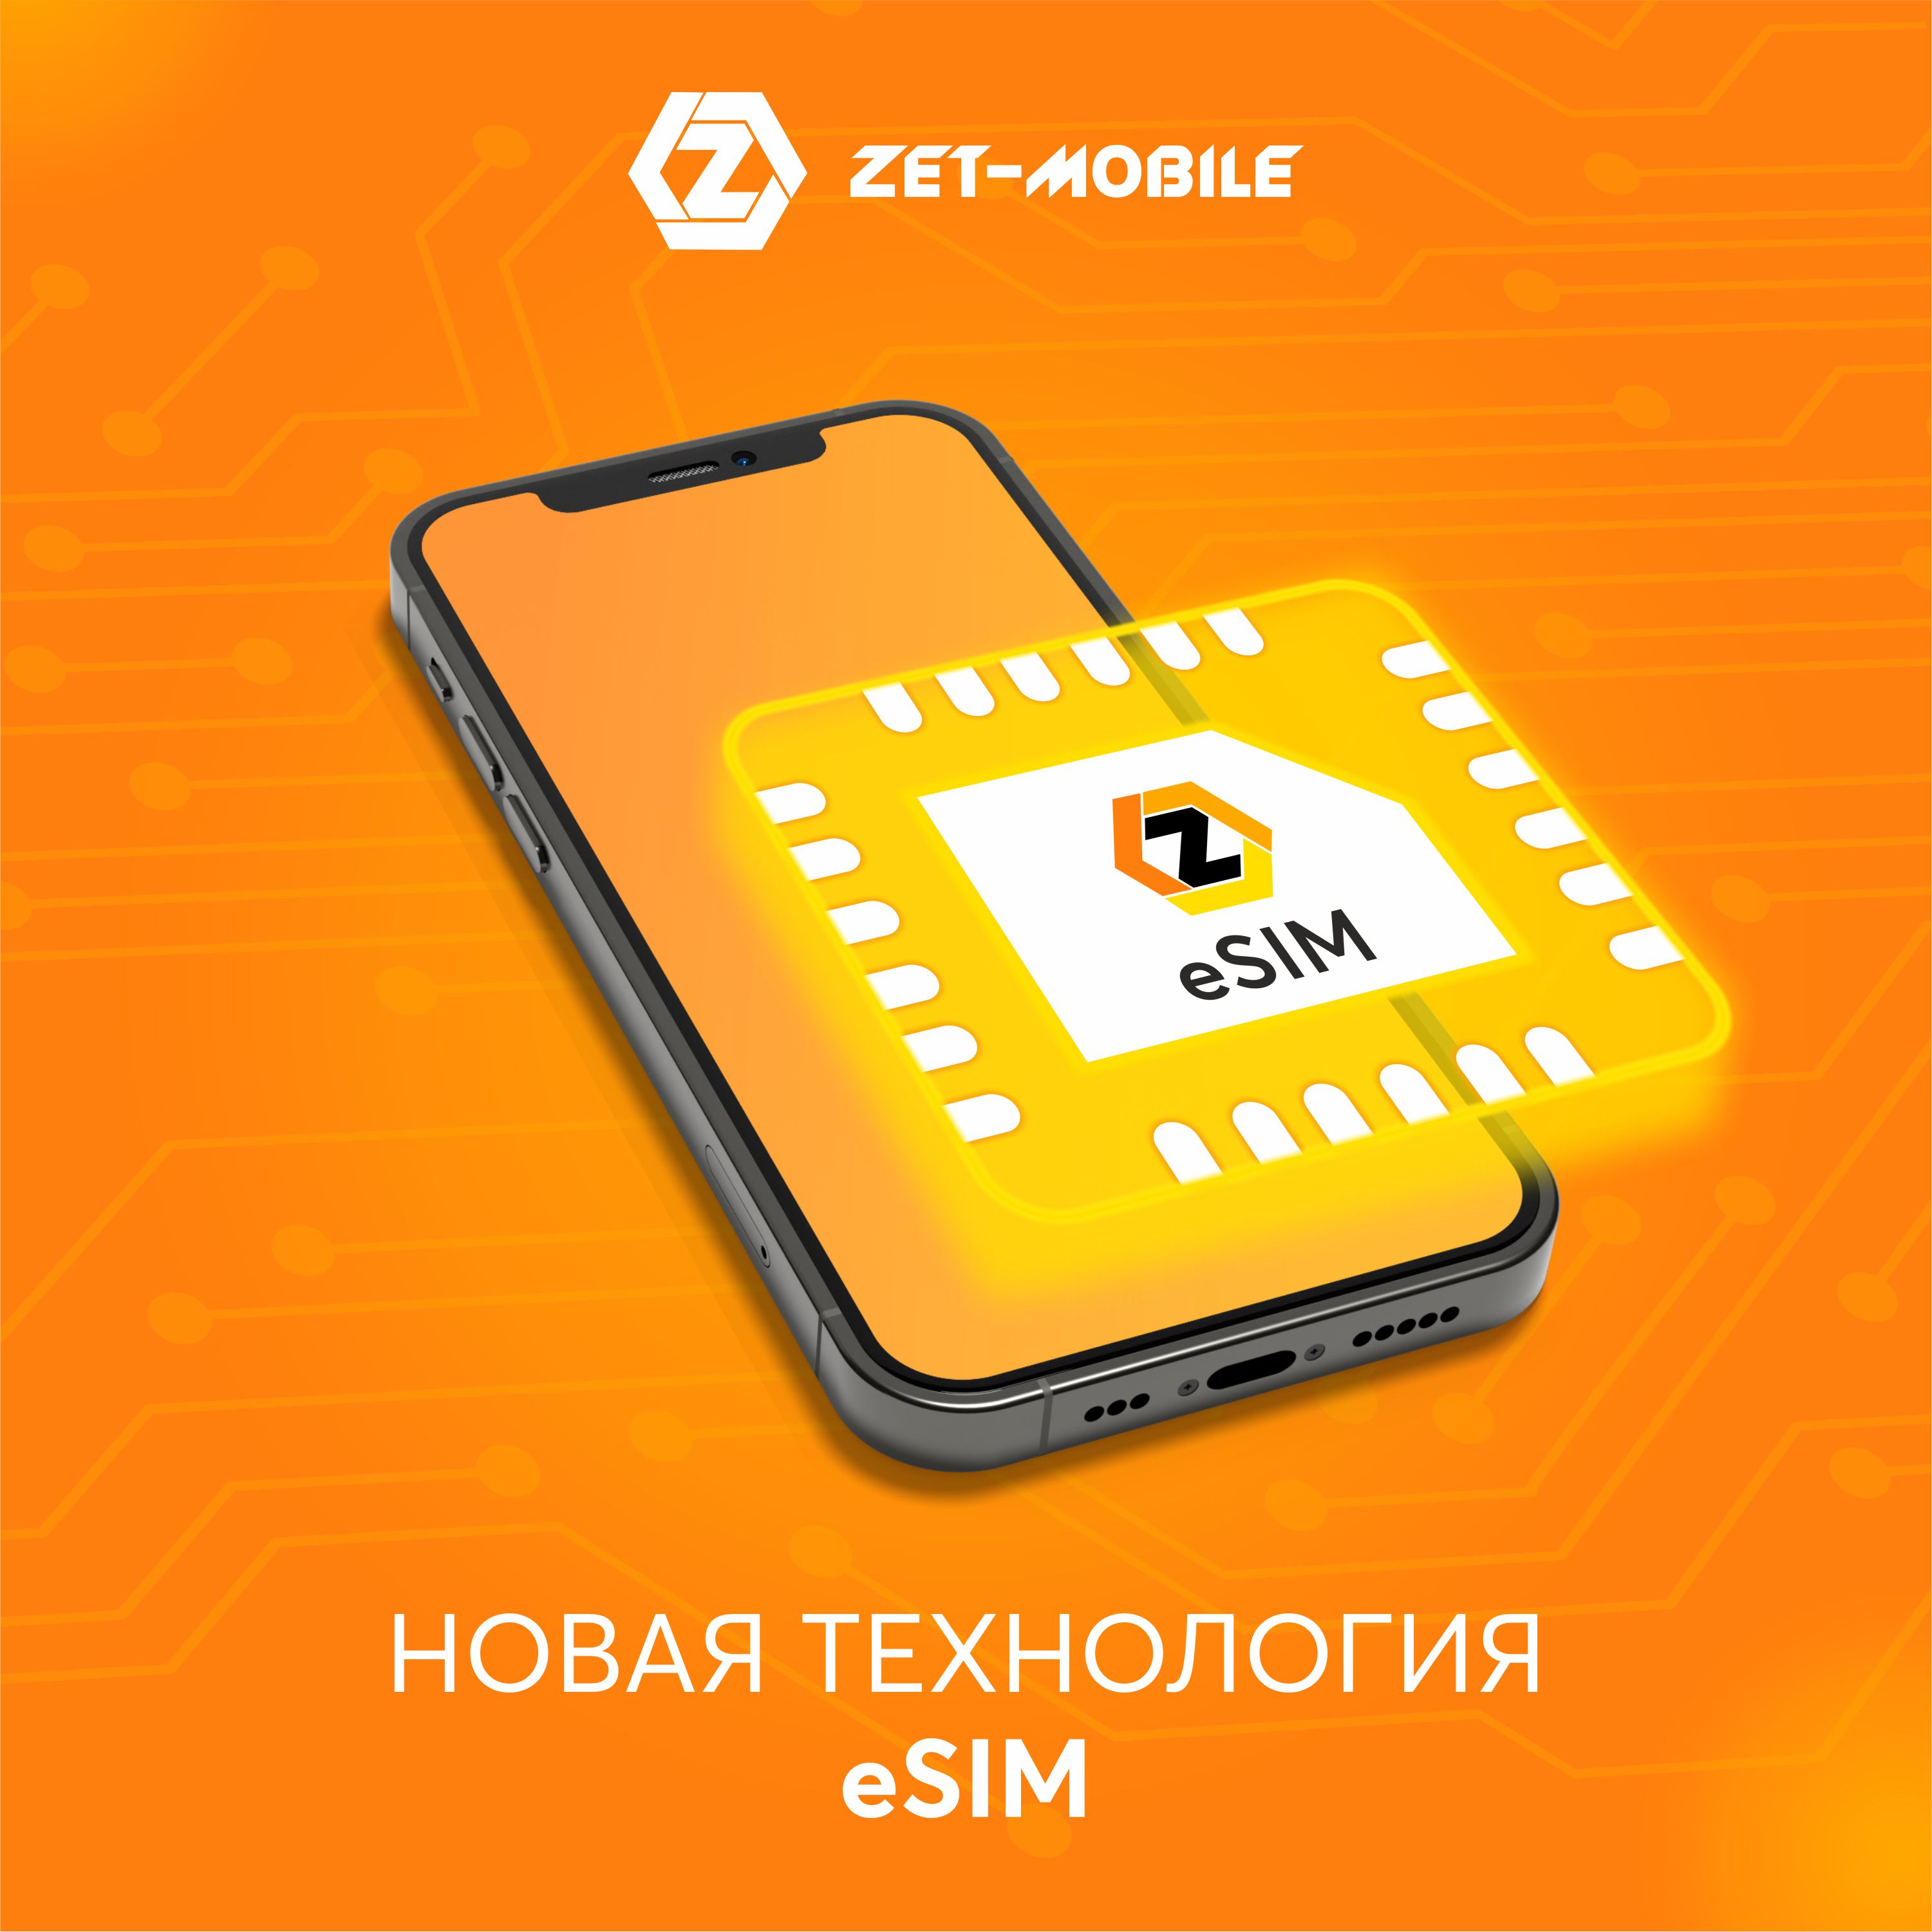 ZET-MOBILE предлагает абонентам перейти на eSIM